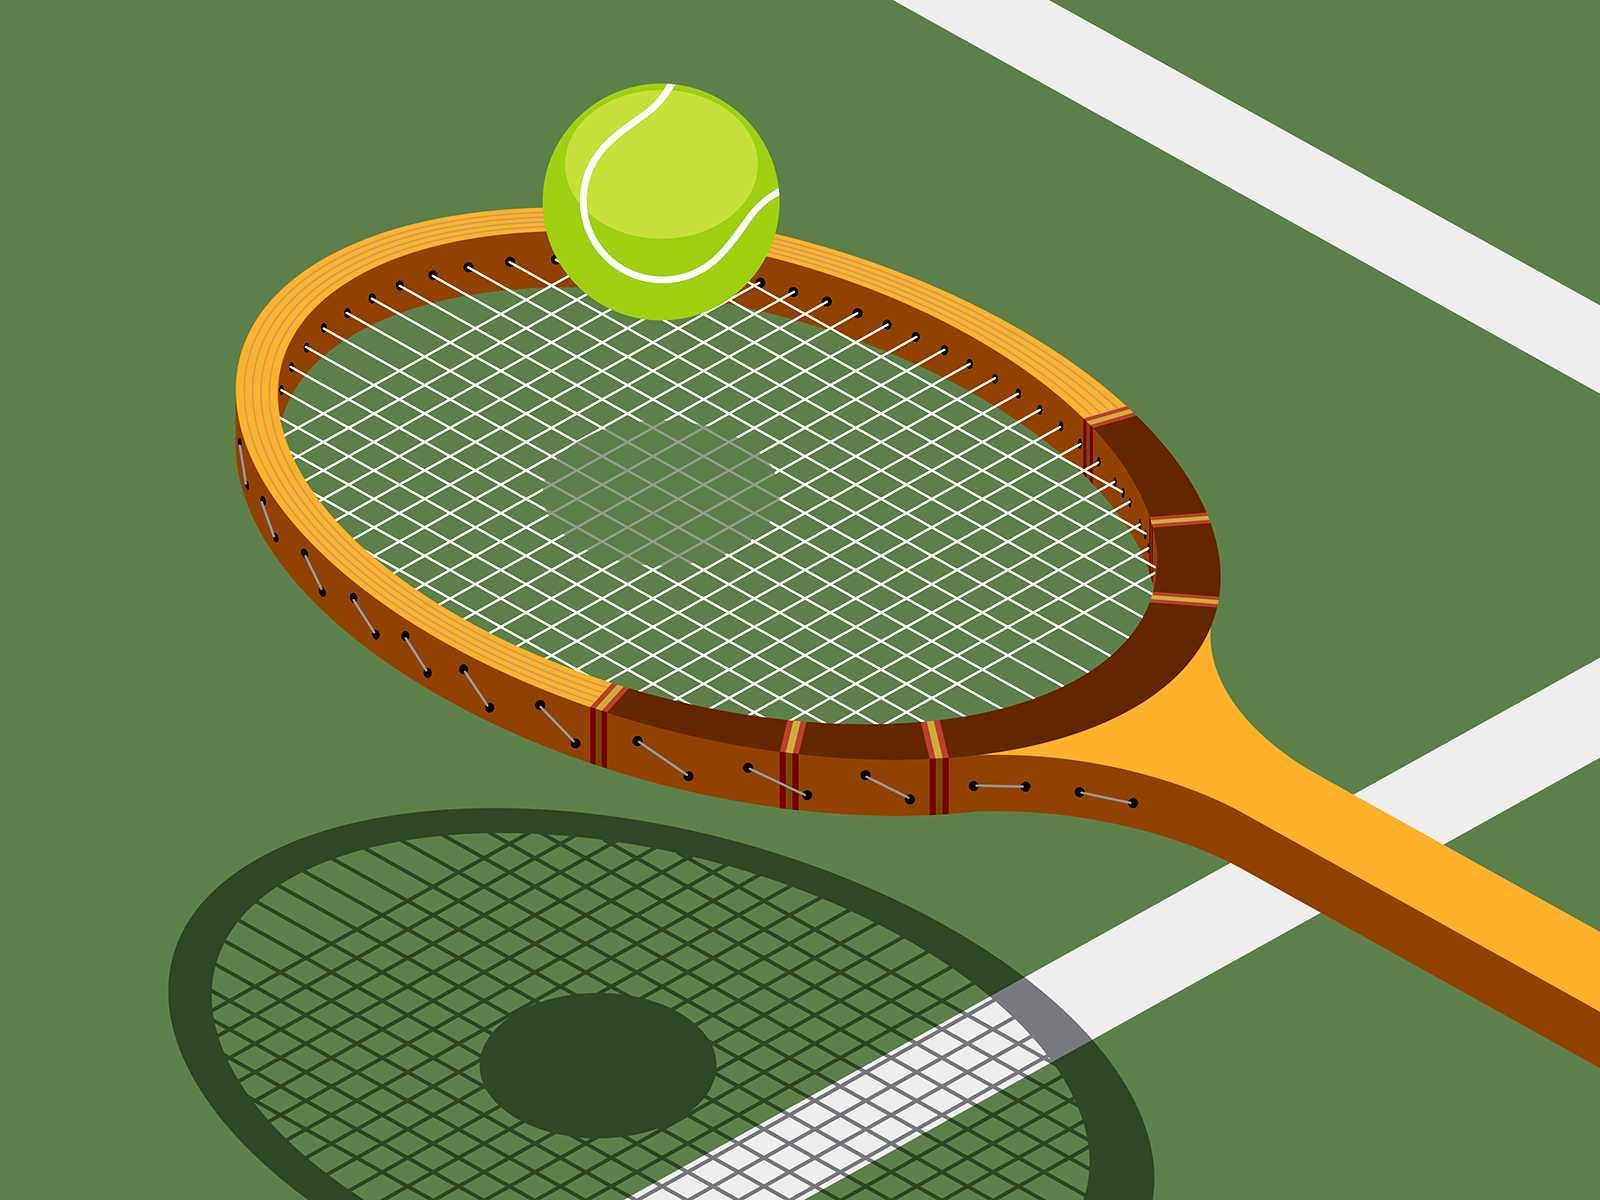 Tennis pattern